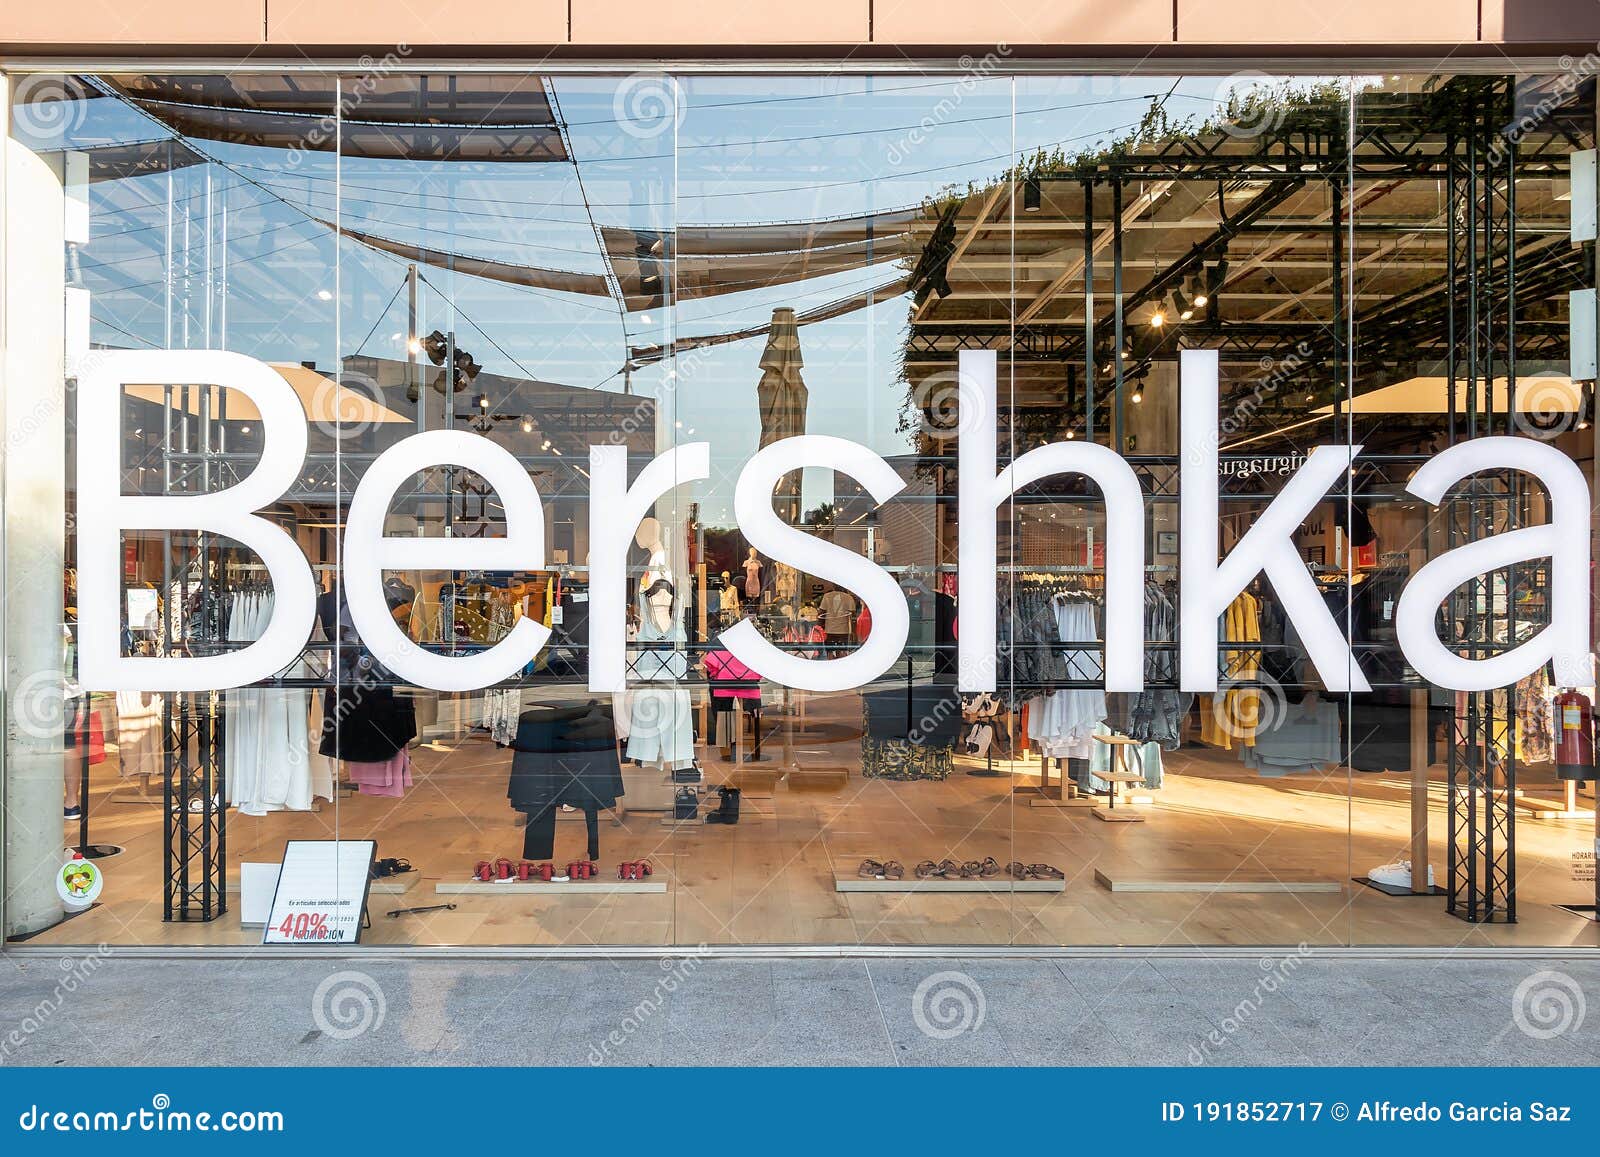 Huelva, Spain - July 27, 2020: Bershka Fashion Store in Holea Shopping  Center. Bershka is Spanish Clothing Retailer Company Editorial Photography  - Image of indoor, facade: 191852717